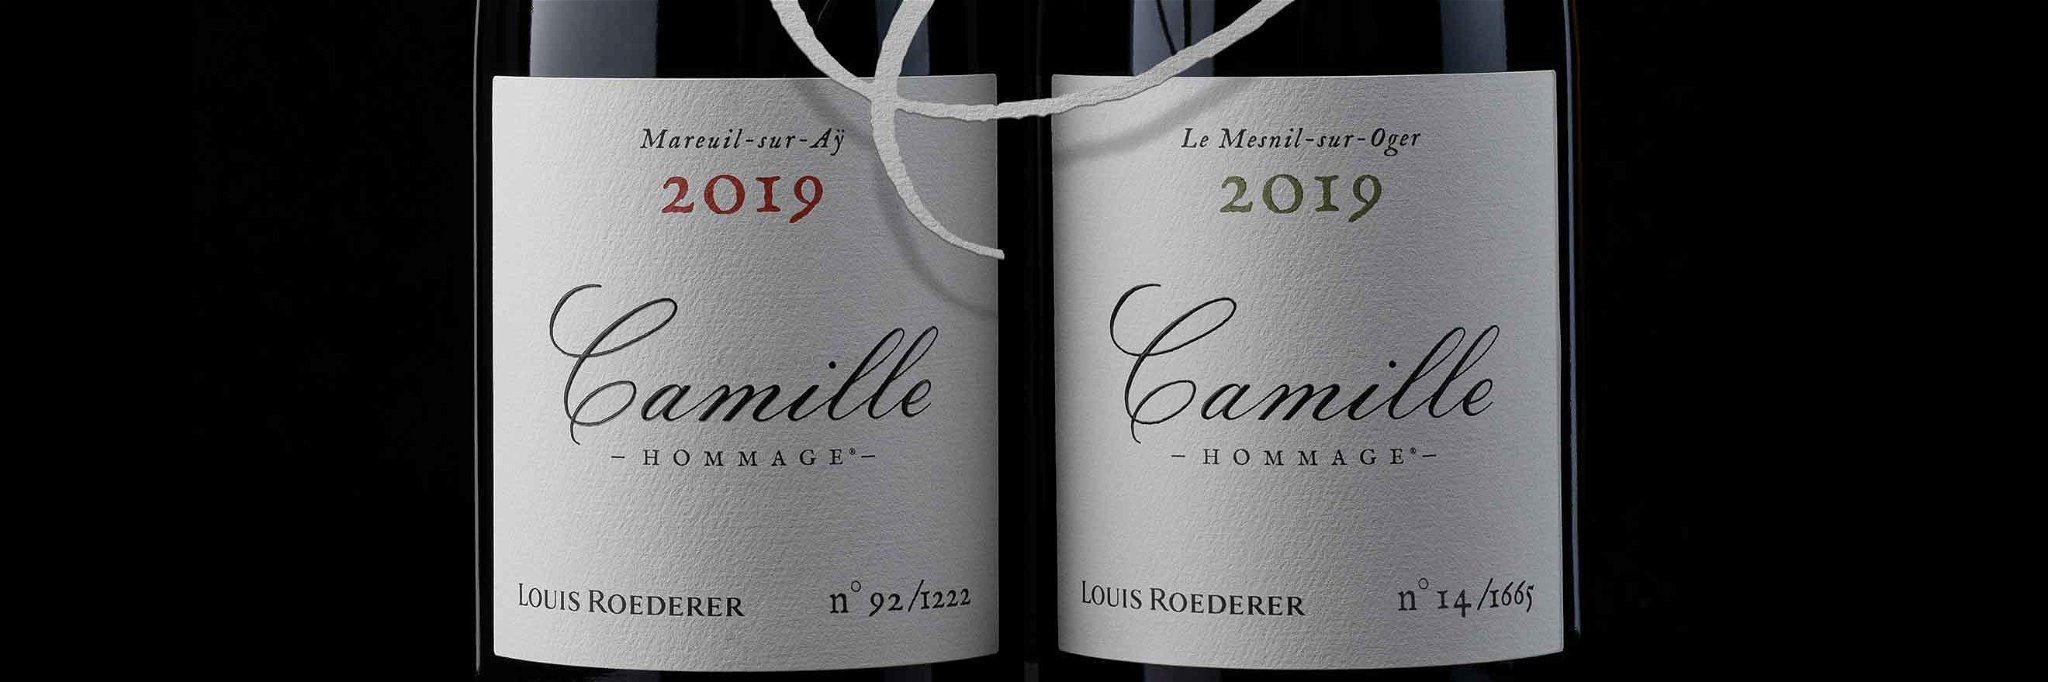 Louis Roederer's 2019 vintage of Hommage à Camille